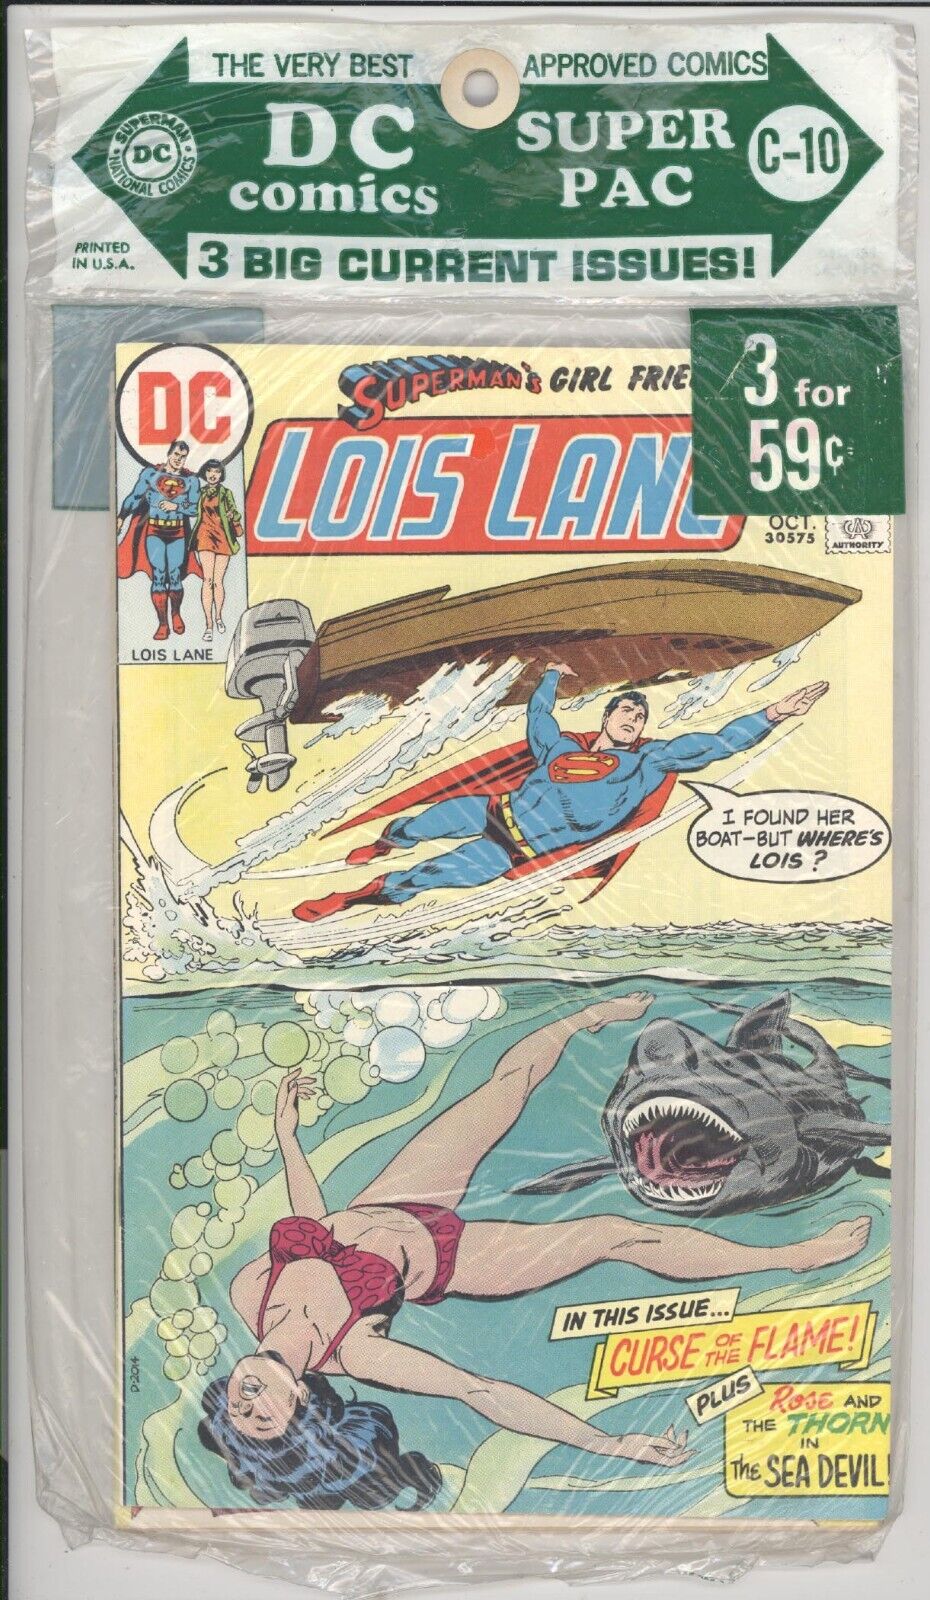 DC SUPER PACK  #C-10  NM-/9.2  - Sealed with Lois Lane Superboy & Inferior Five